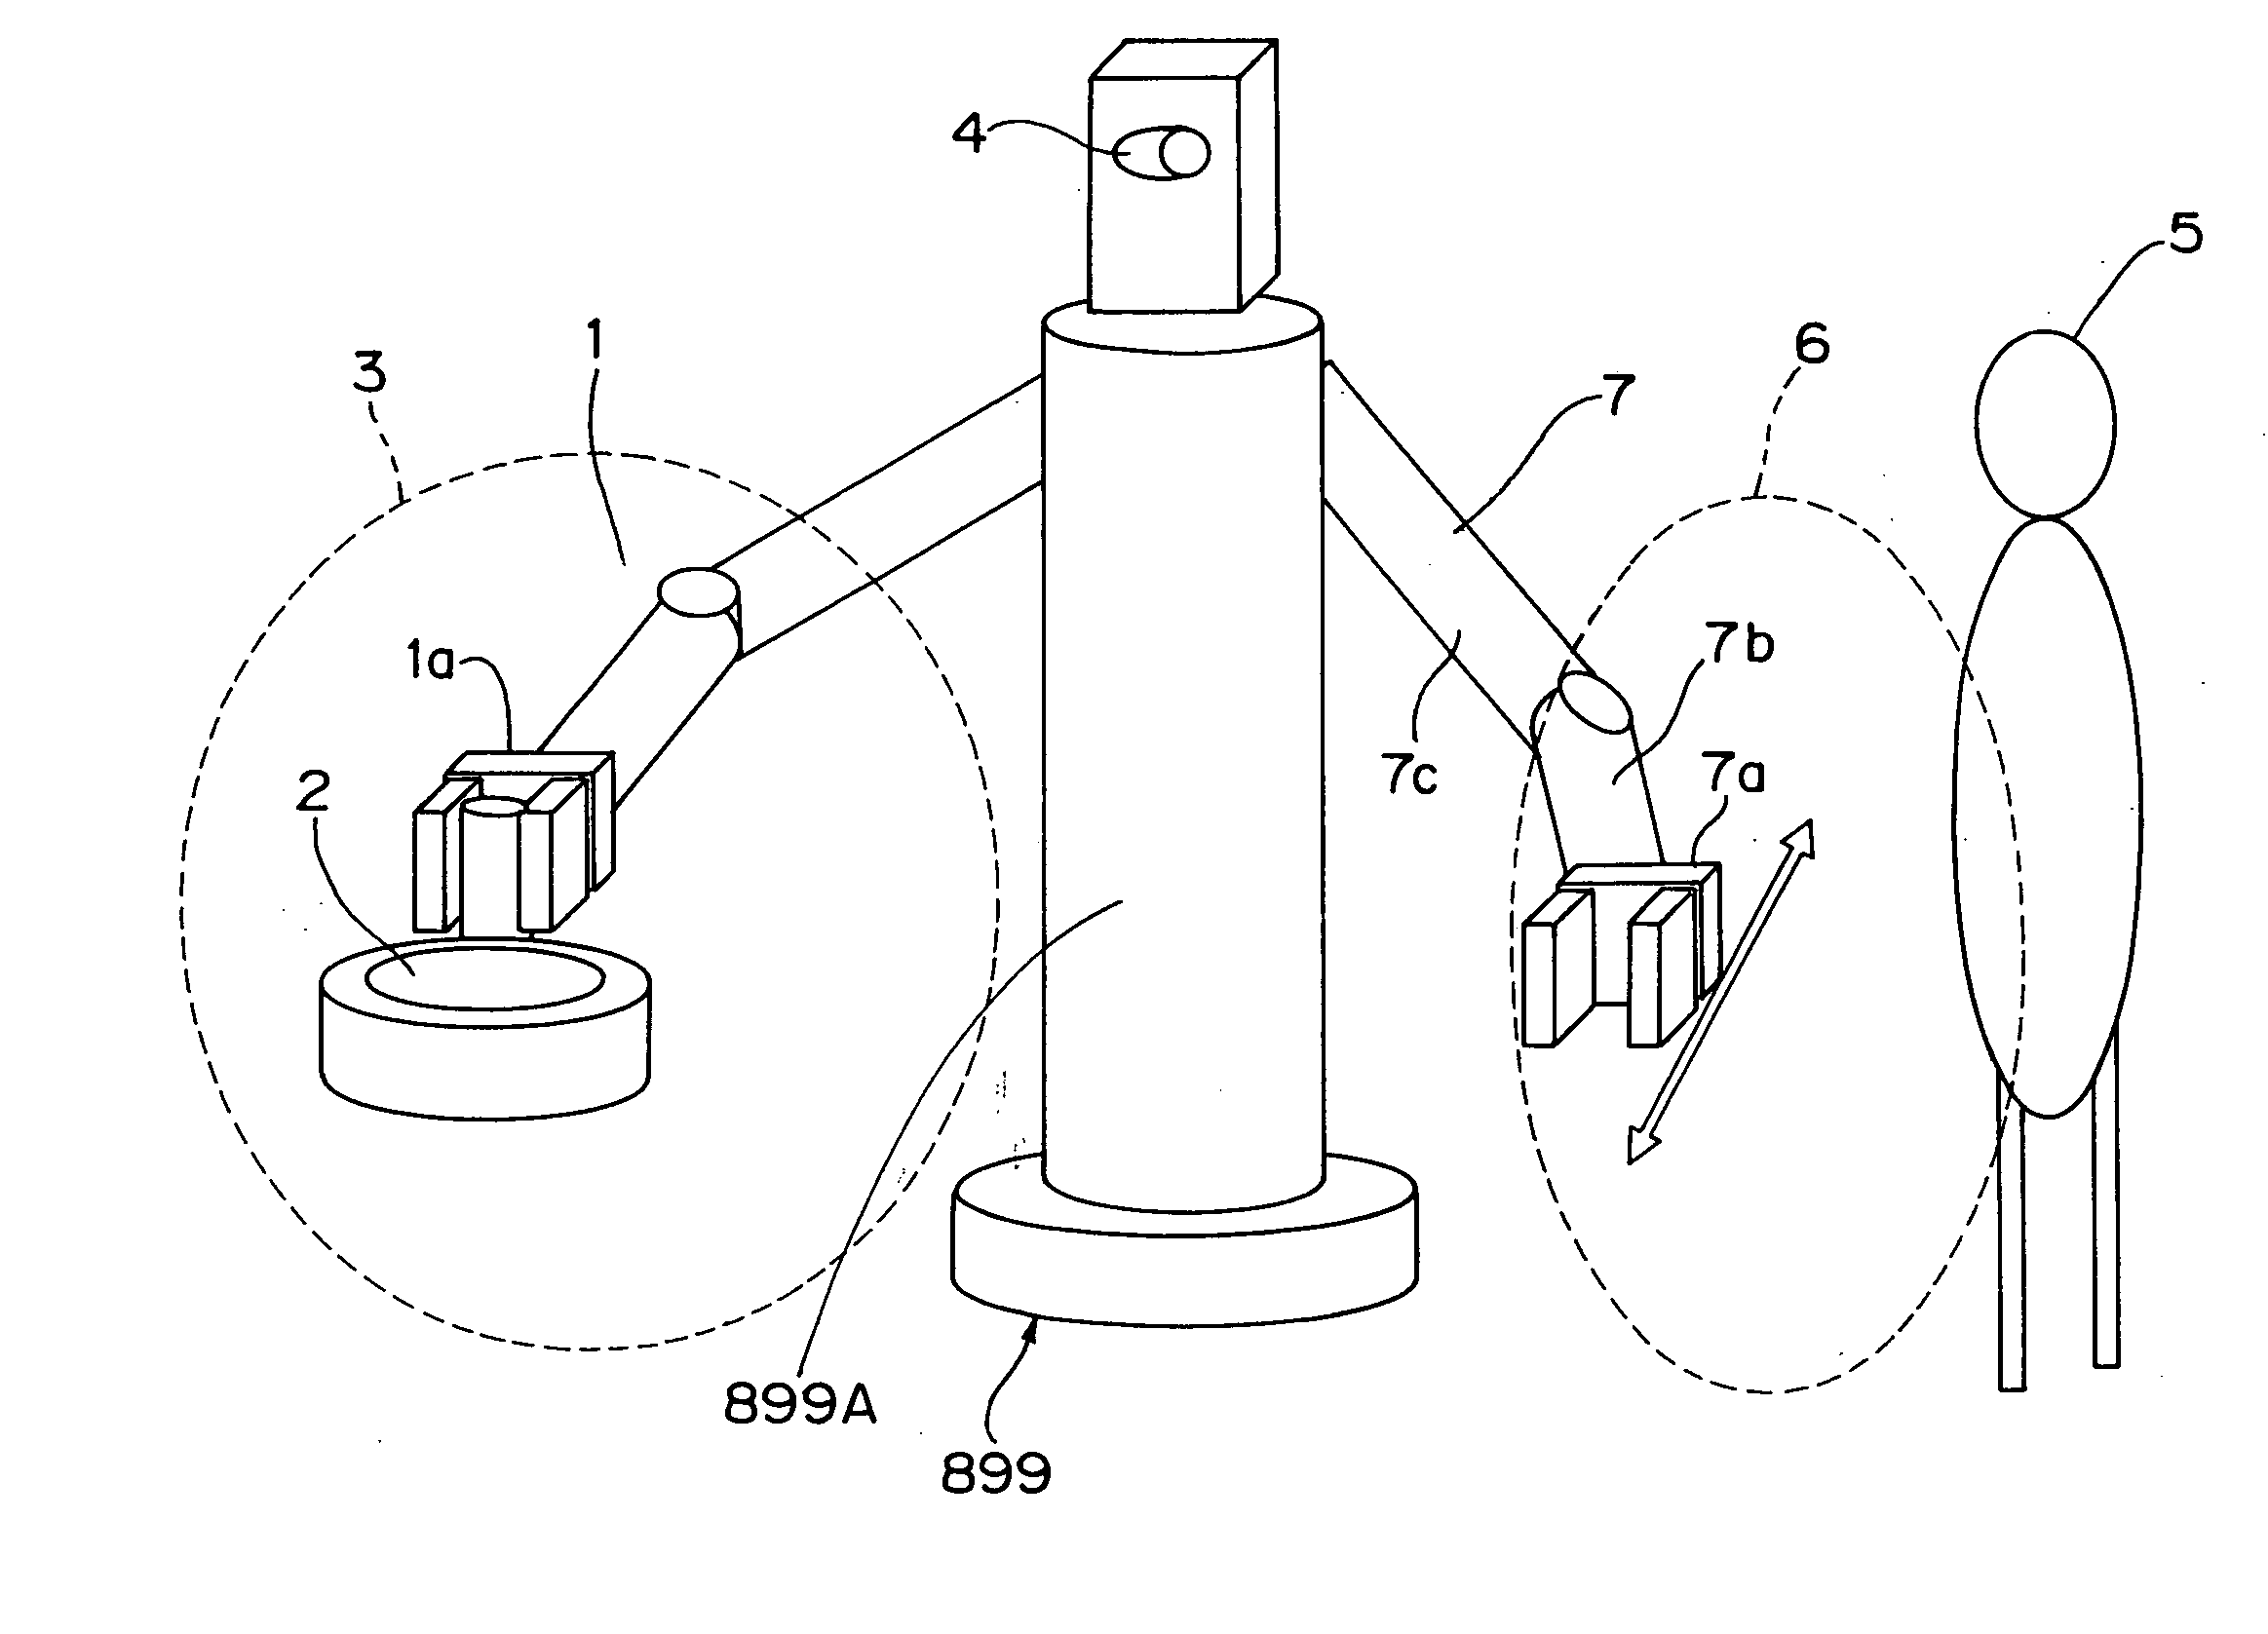 Robot apparatus